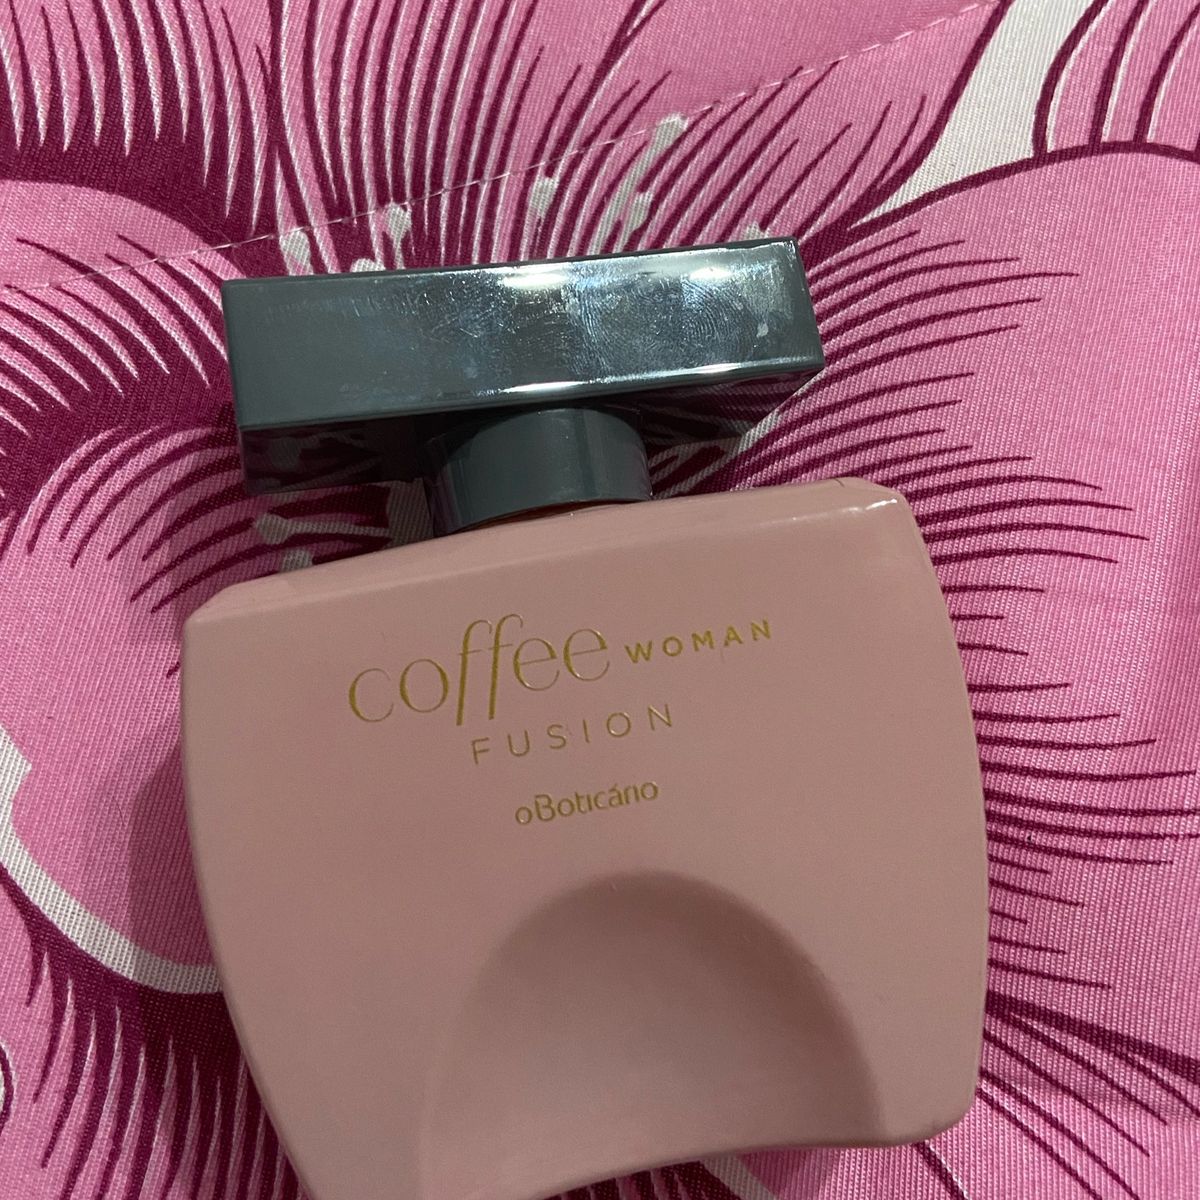 Coffee Woman Fusion O Boticário, Perfume Feminino O Boticário Nunca Usado  56187288